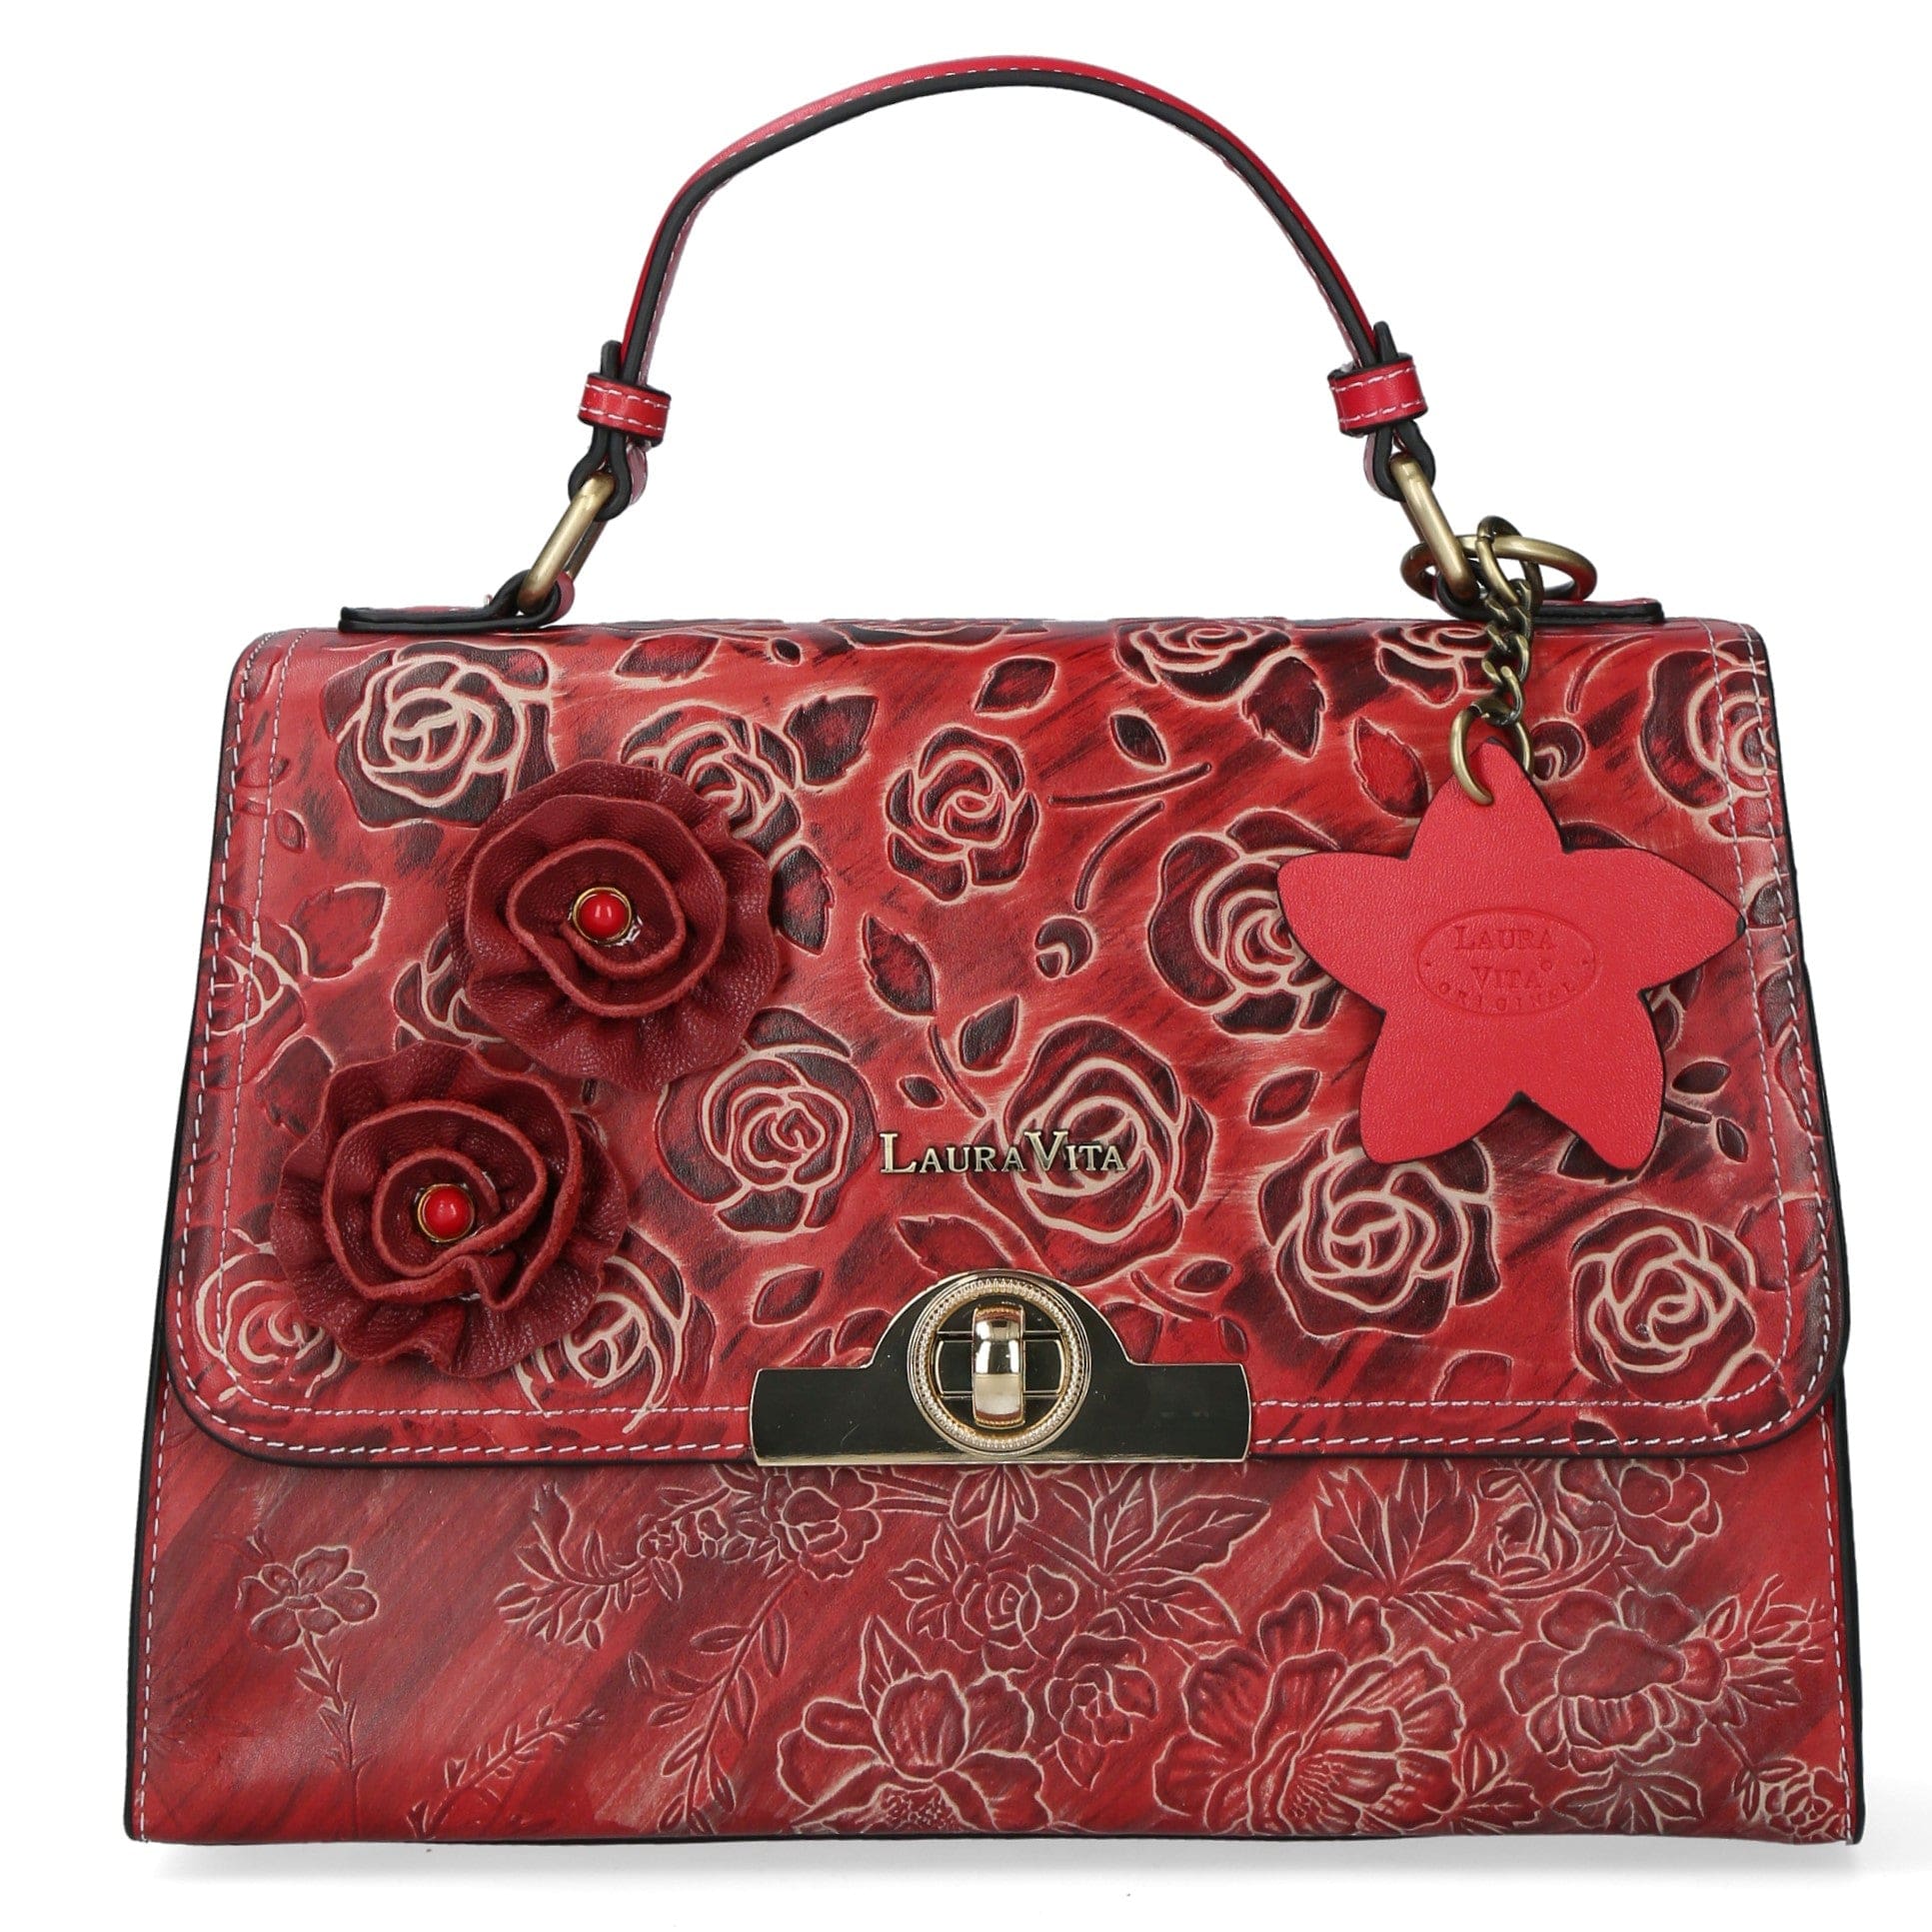 Taschen Handtasche Leder 4231A - Rot - - Taschen